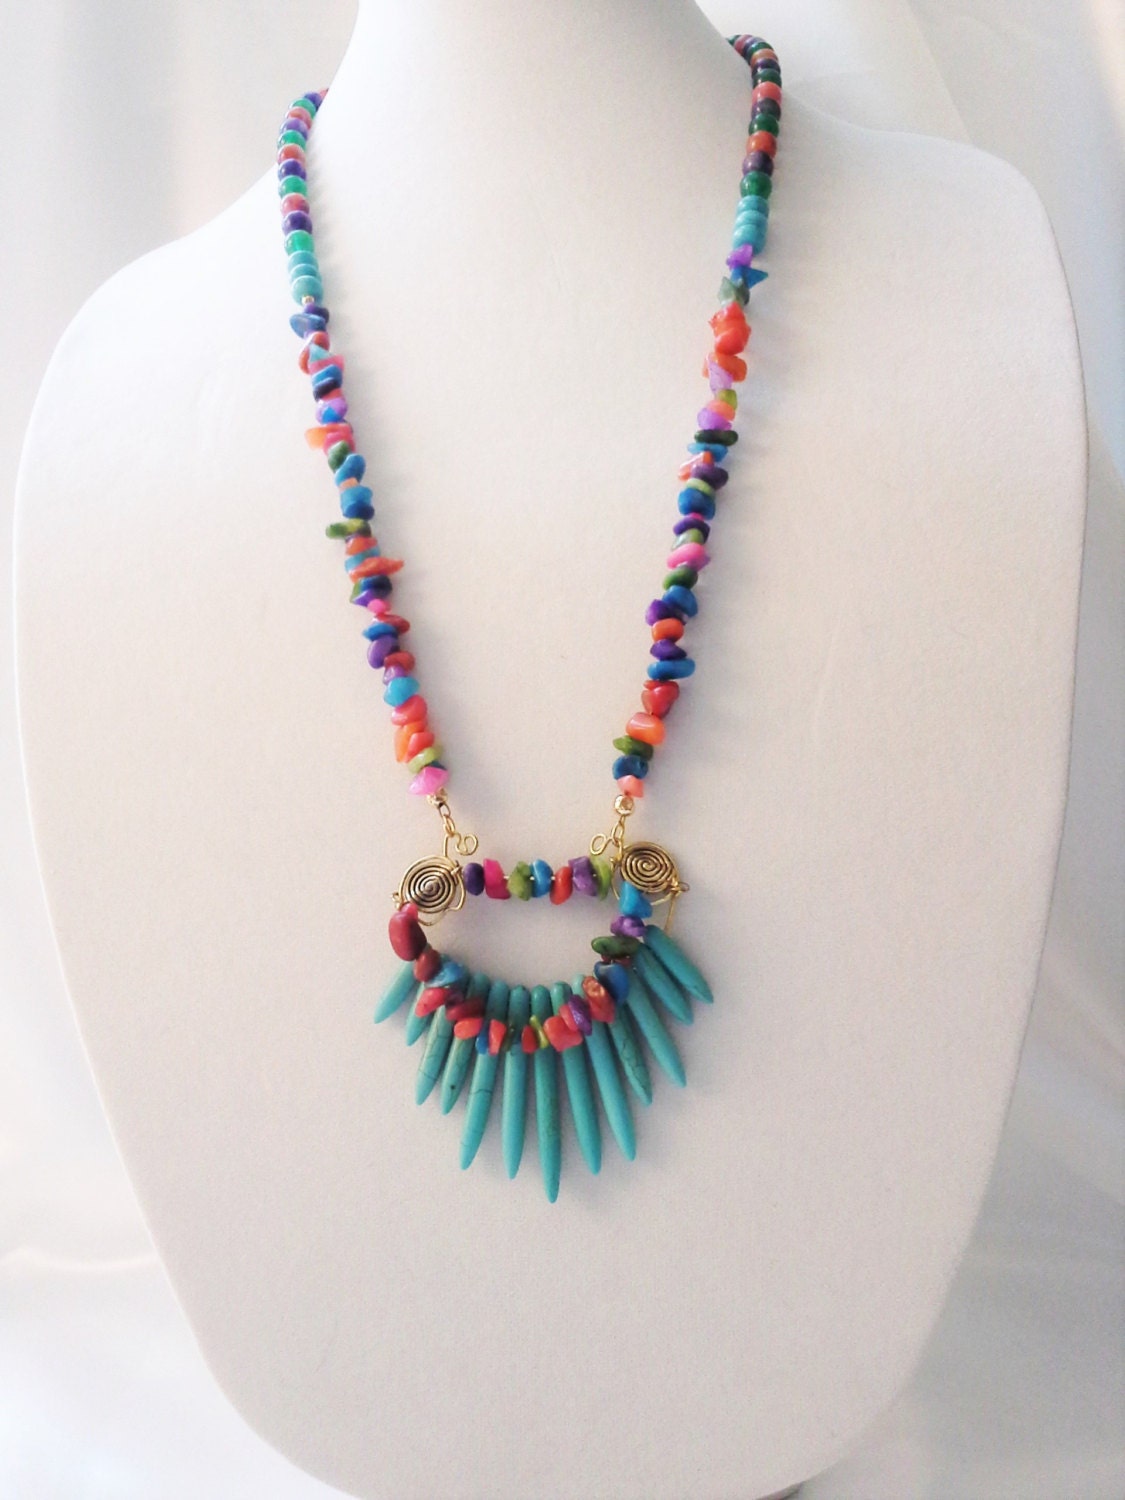 Fashion jewelry Turquoise spike necklace by BeadFashionistaShop